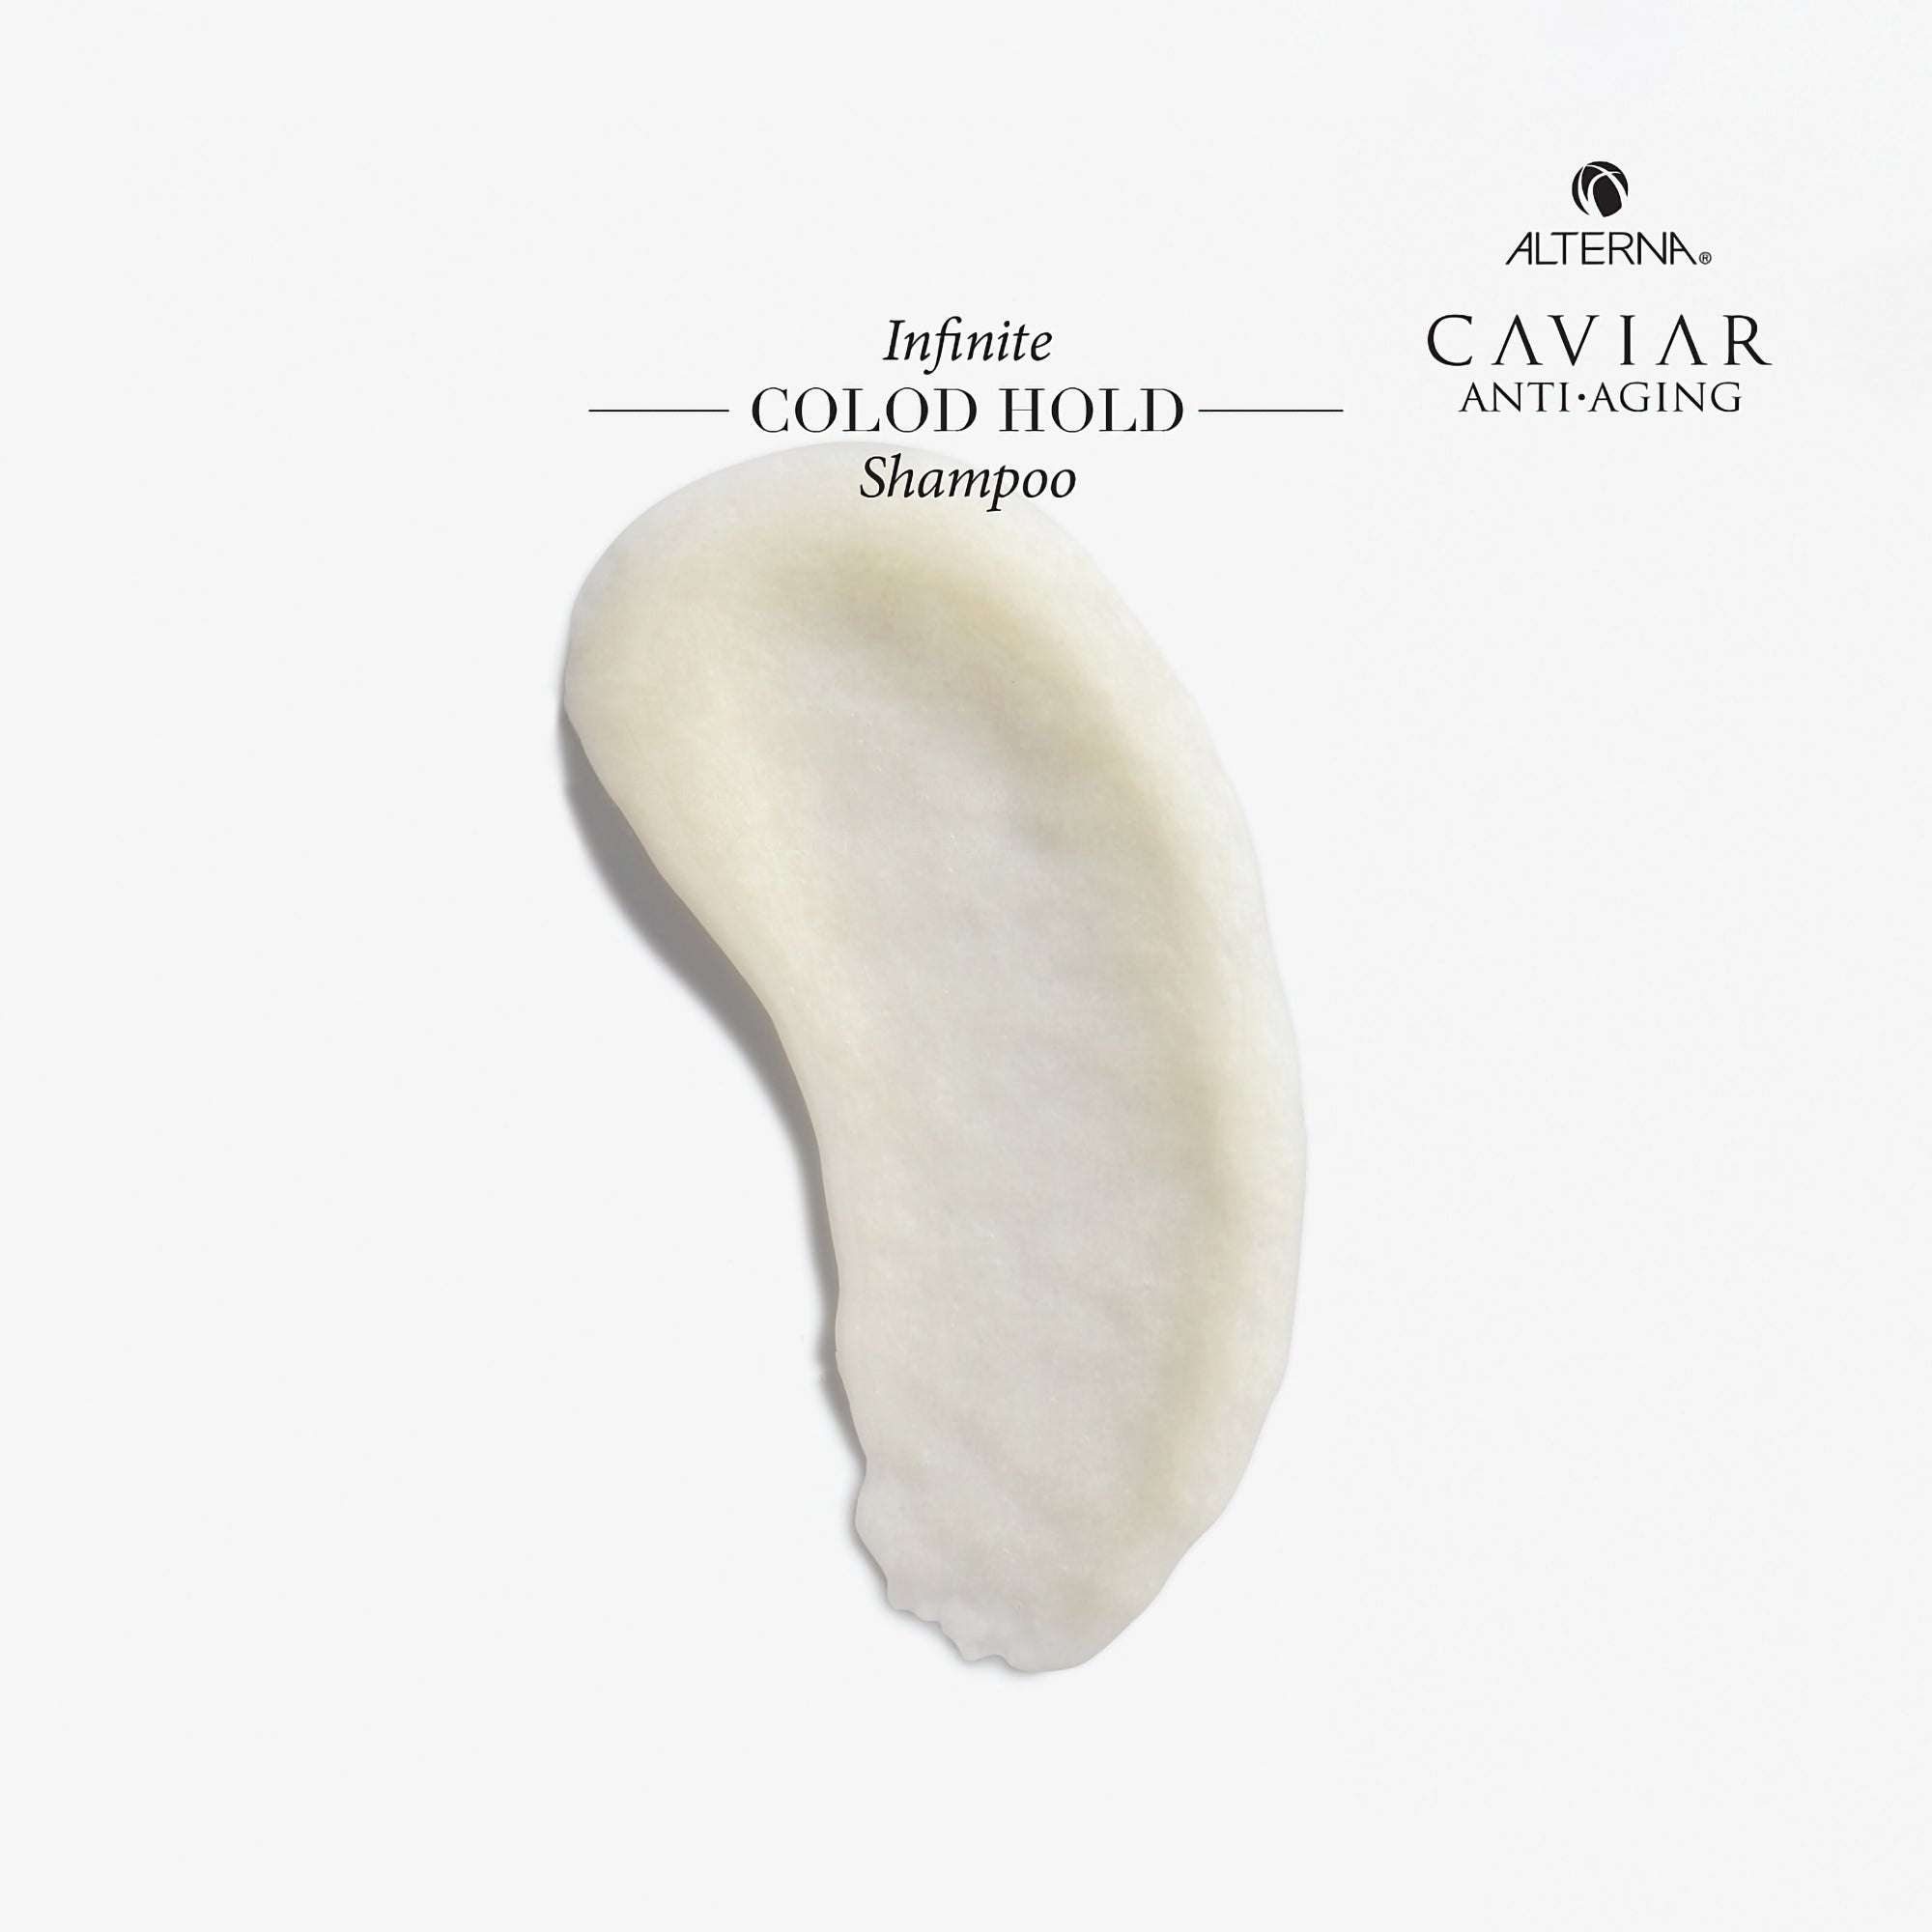 Alterna Caviar Anti-Aging Infinite Color Hold Shampoo / 33.8OZ